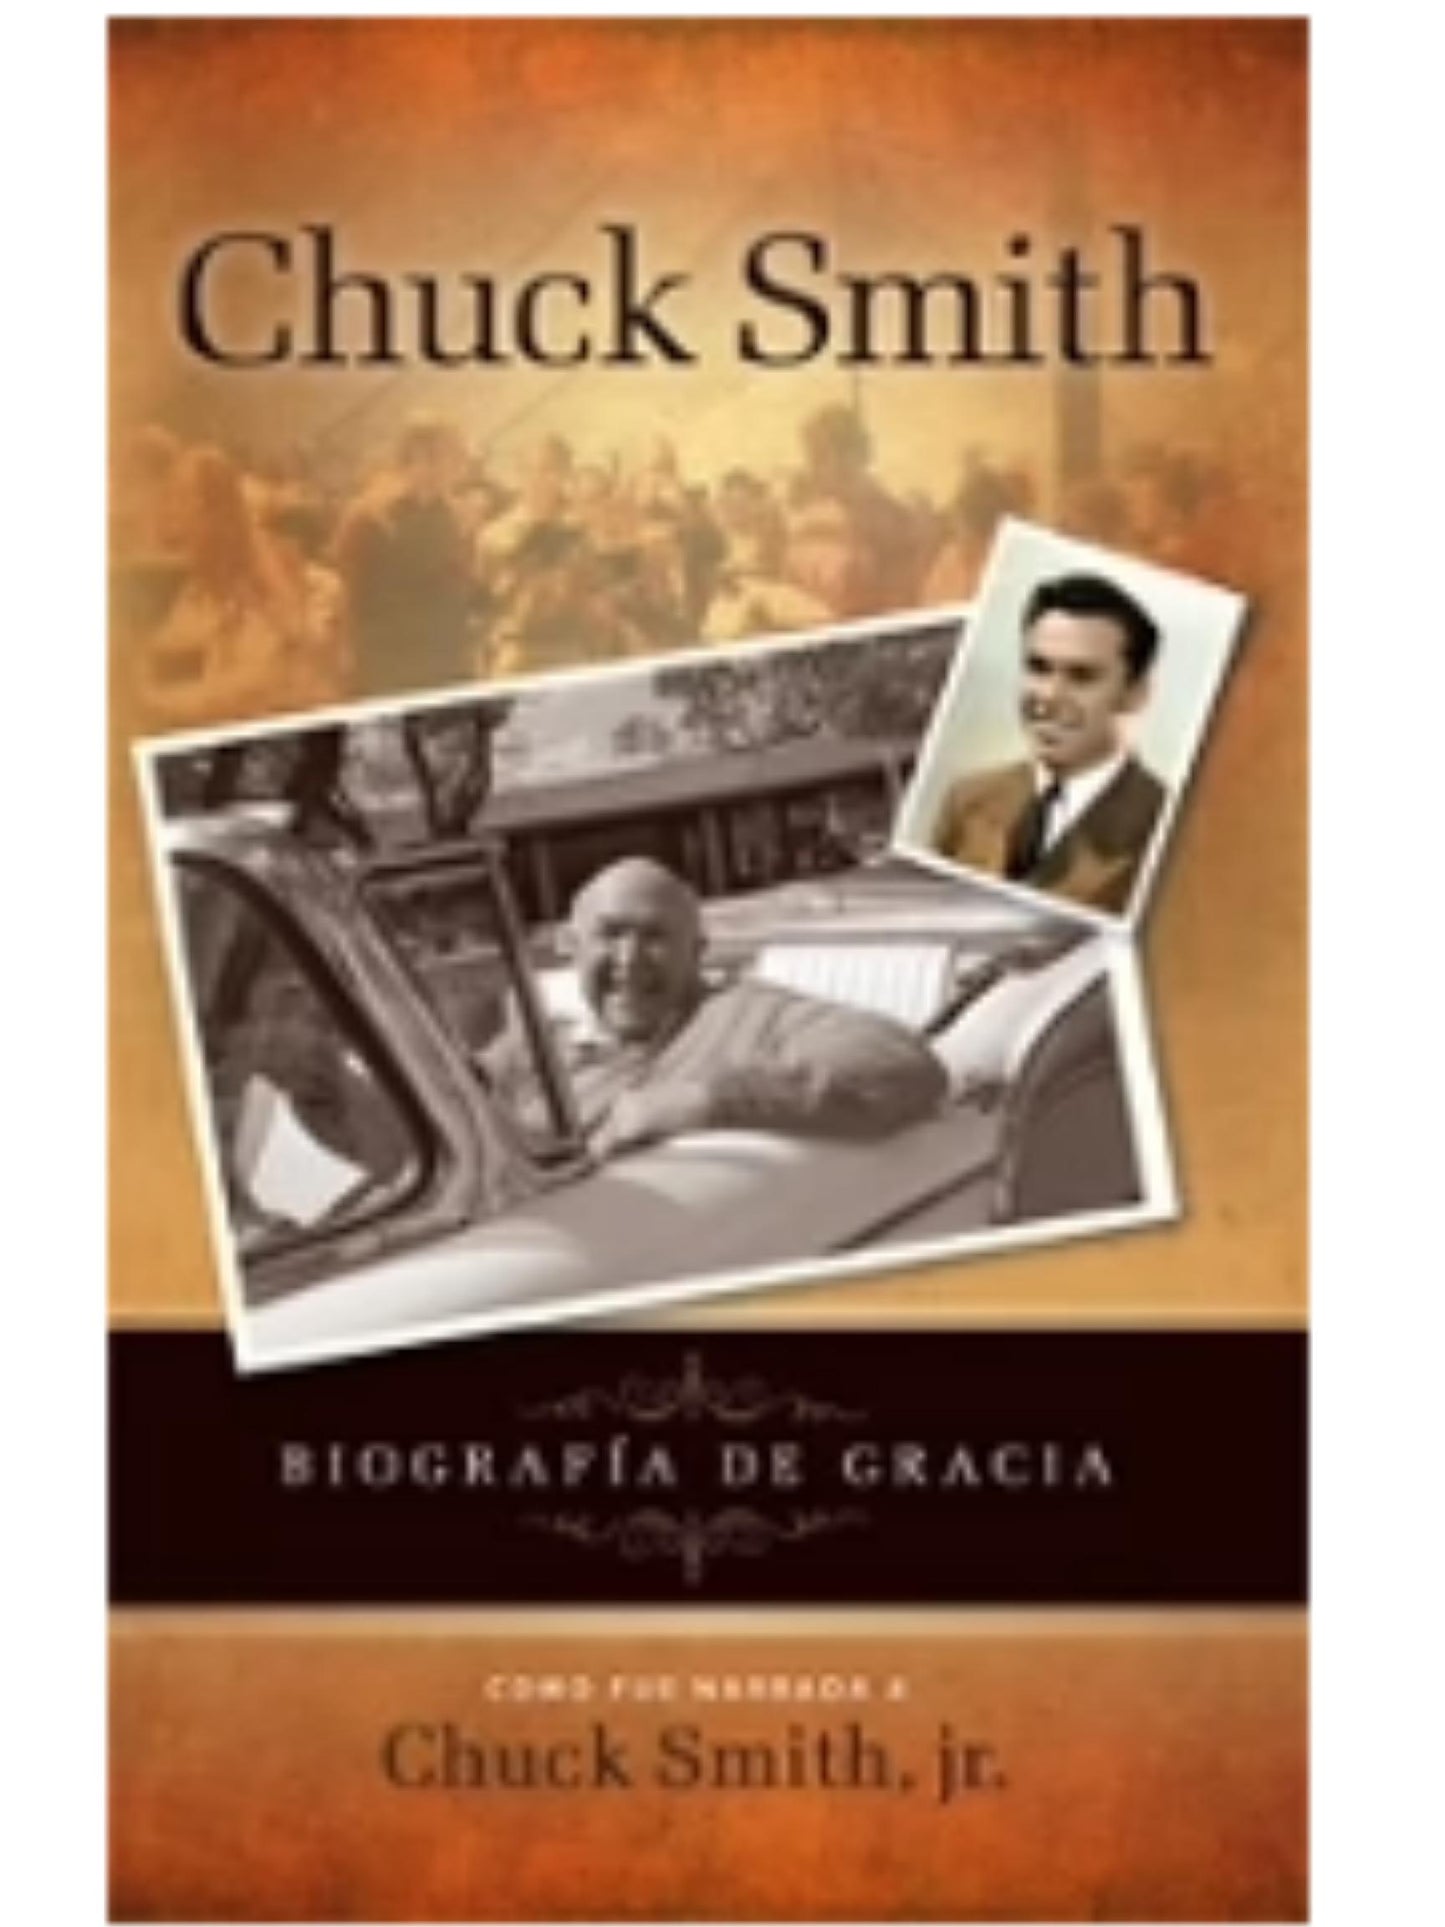 Chuck Smith: Biografia de Gracia (Spanish Edition)